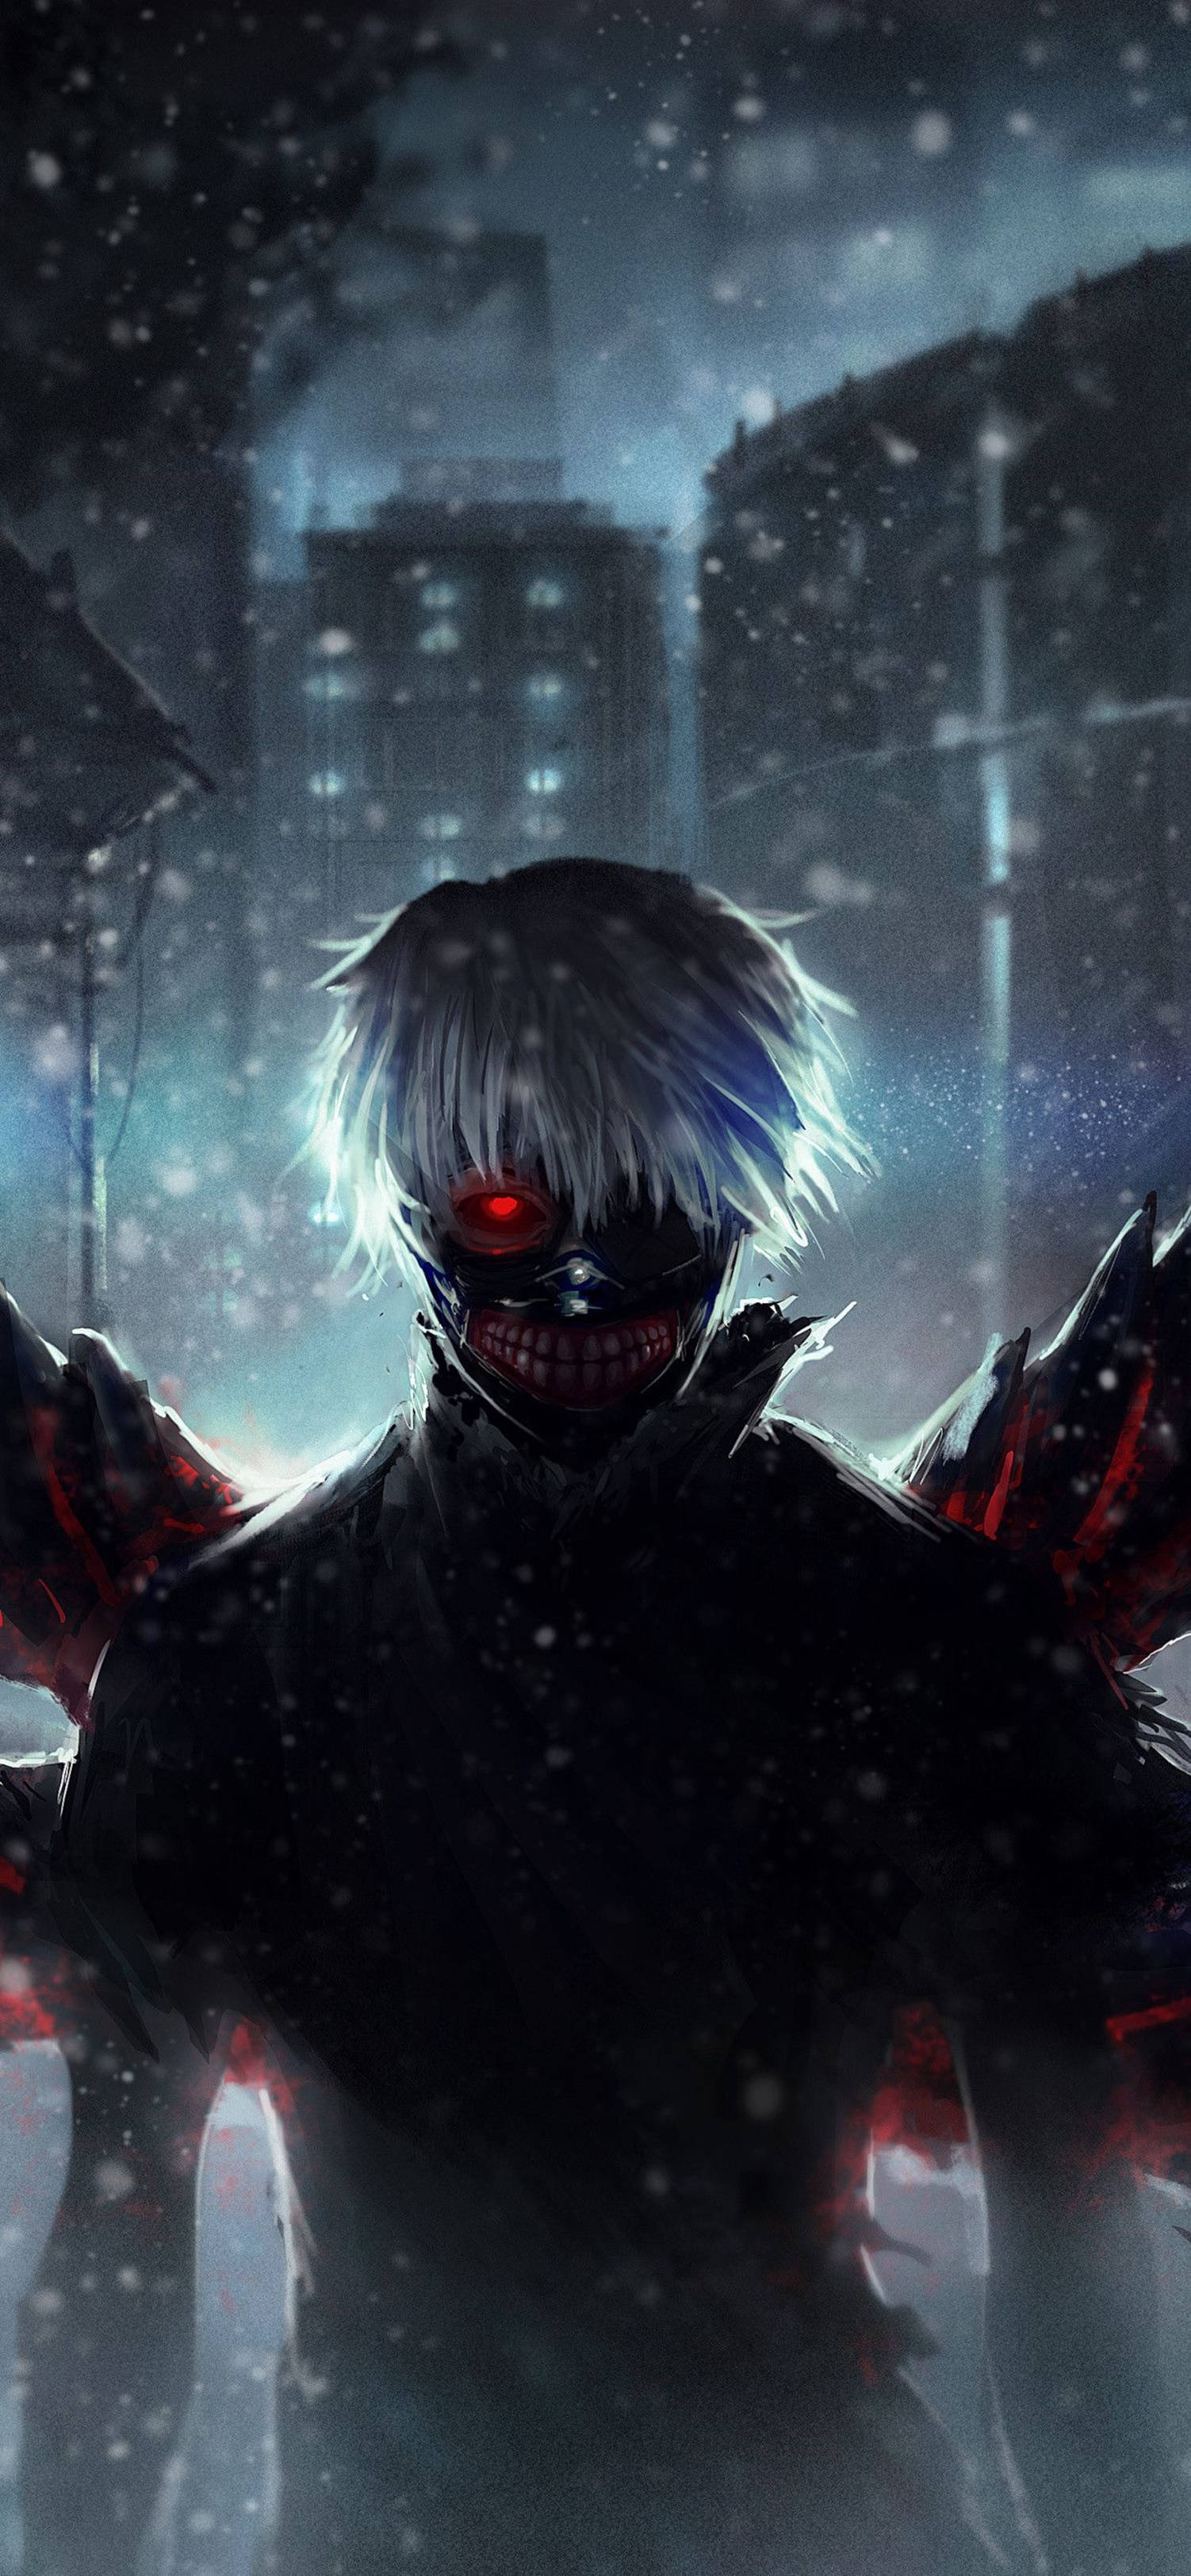 Download 4k Anime Iphone Tokyo Ghoul Dark Ken Wallpaper 